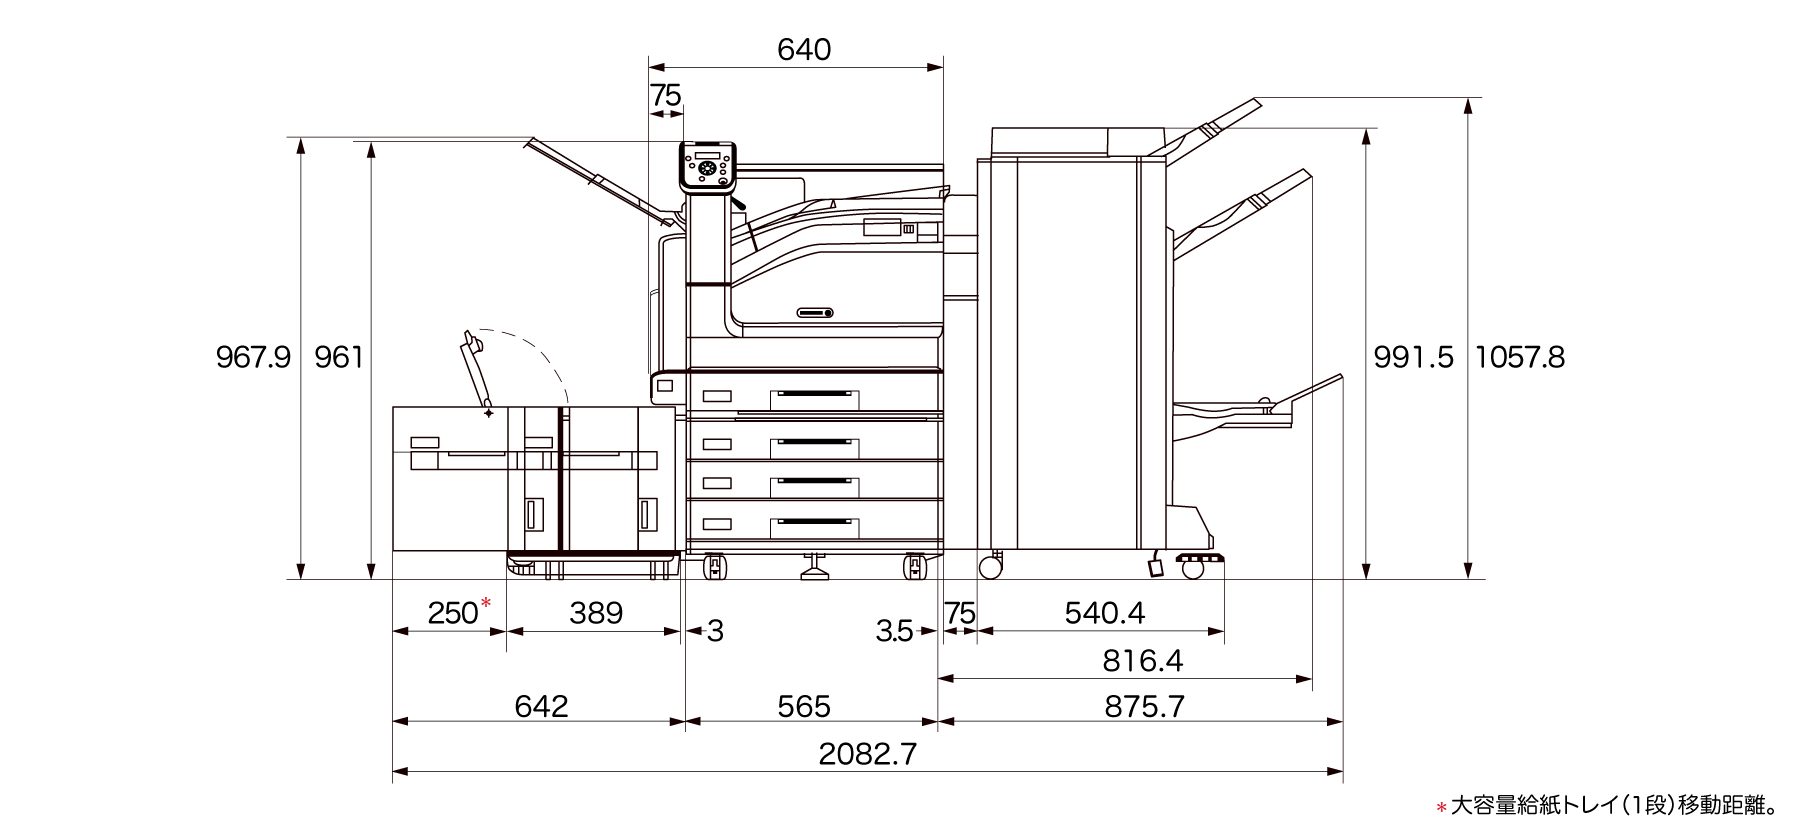 ［DocuPrint C5150 d 正面図］本体 ＋ 3トレイモジュール ＋ 大容量給紙トレイ（1段） ＋ 中とじフィニッシャーC1 ＋ サイドトレイ設置時。